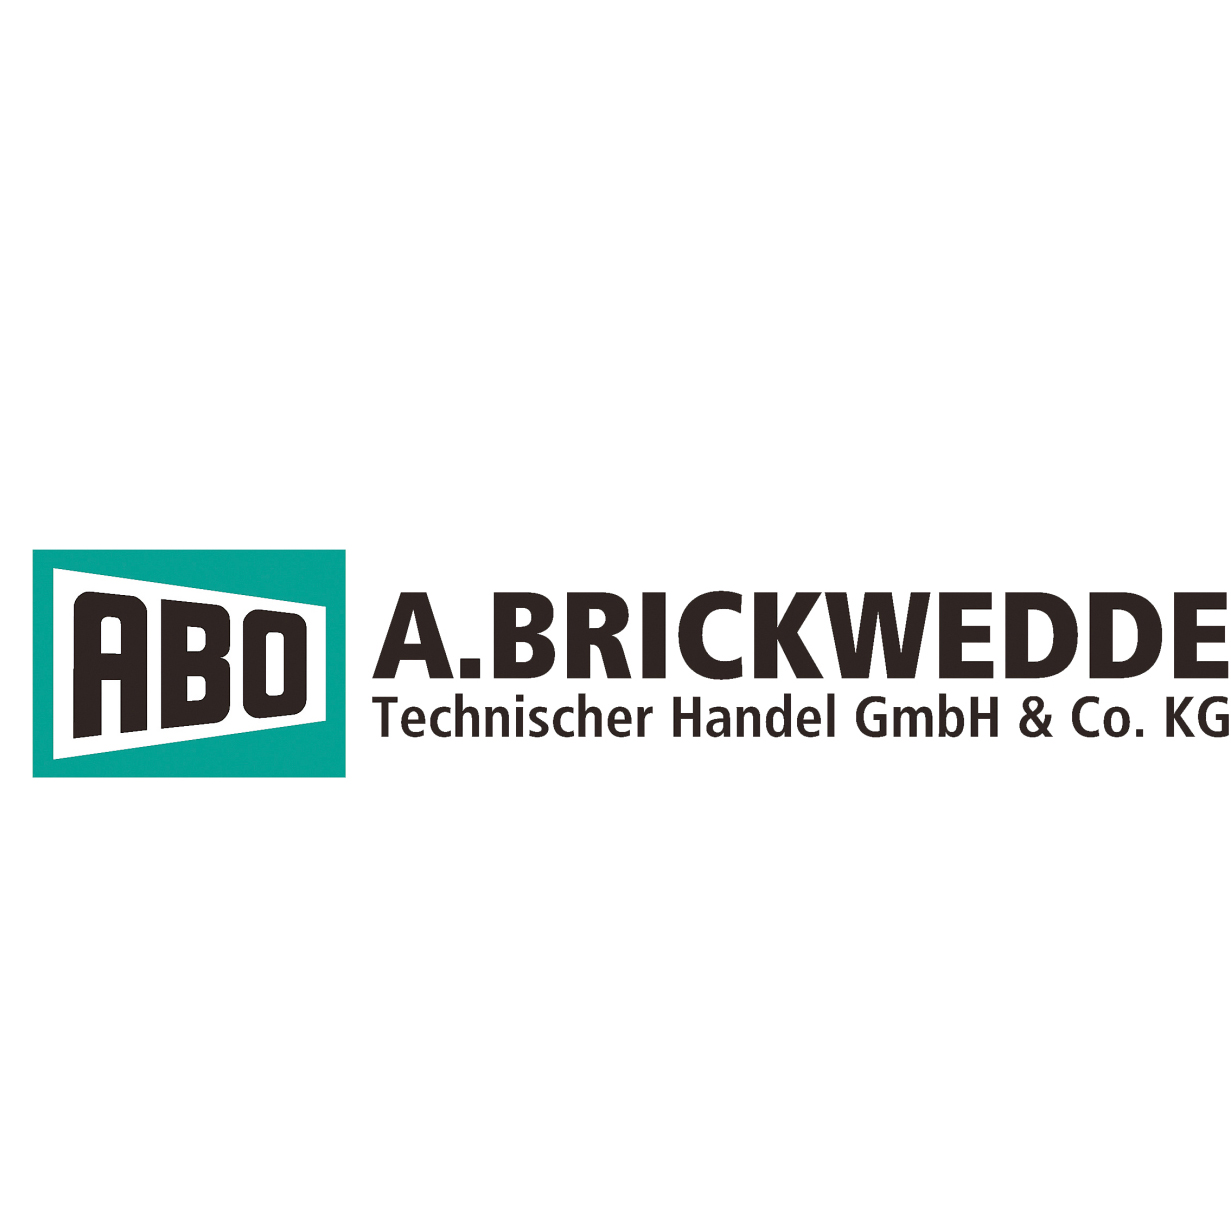 A. Brickwedde GmbH & Co. KG